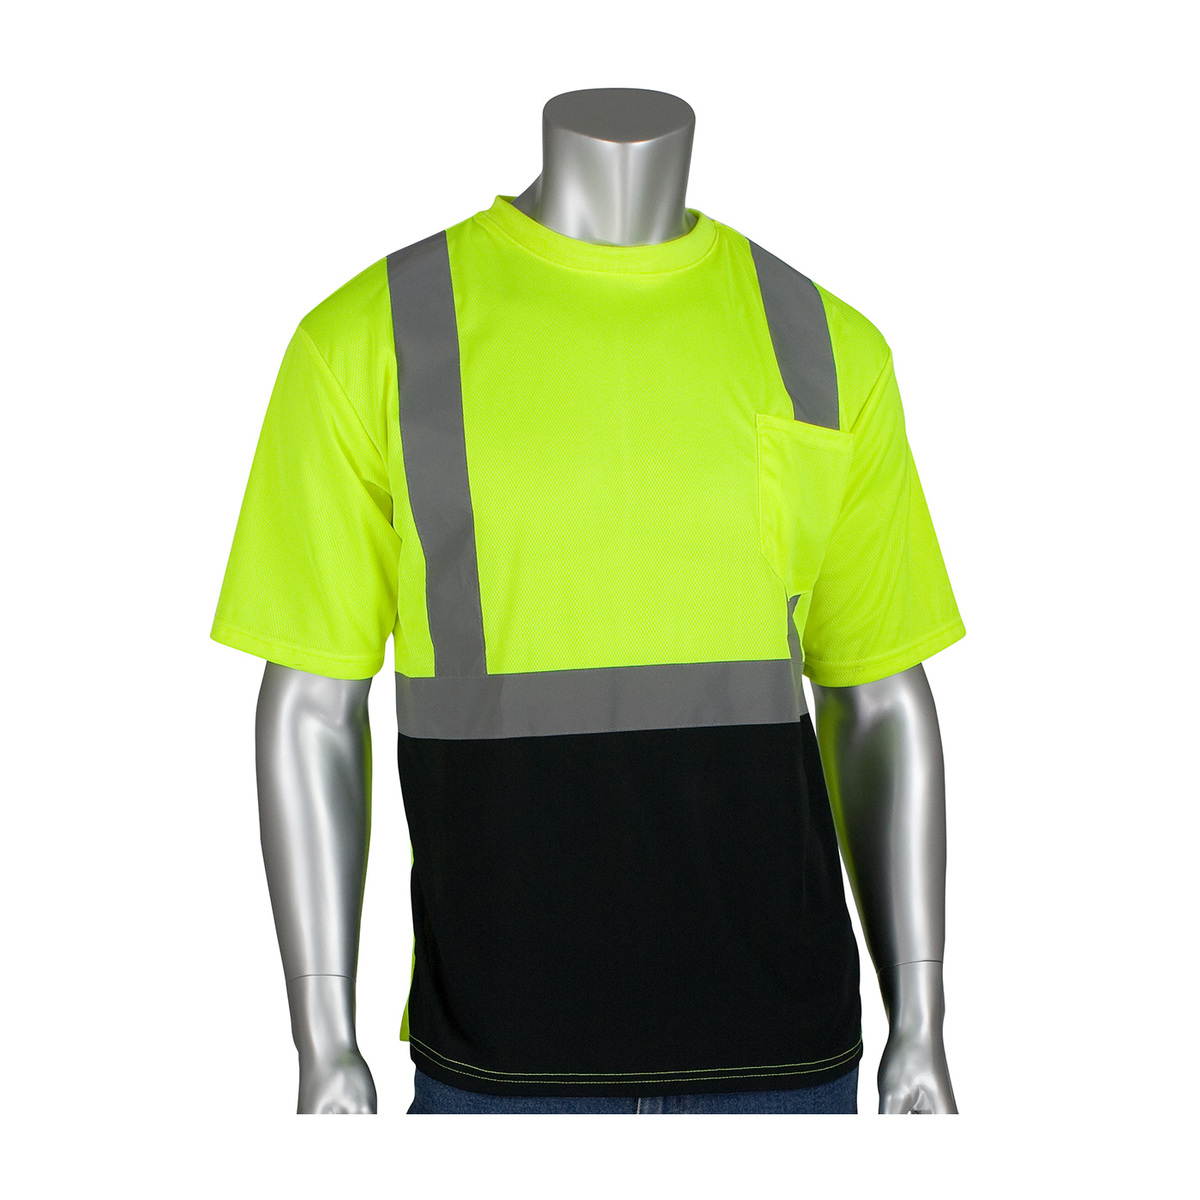 PIP® Medium Hi-Viz Yellow/Hi-Viz Orange 1 Polyester/Birdseye Mesh Two-Tone Short Sleeve Shirt - PIP3121250BLYM